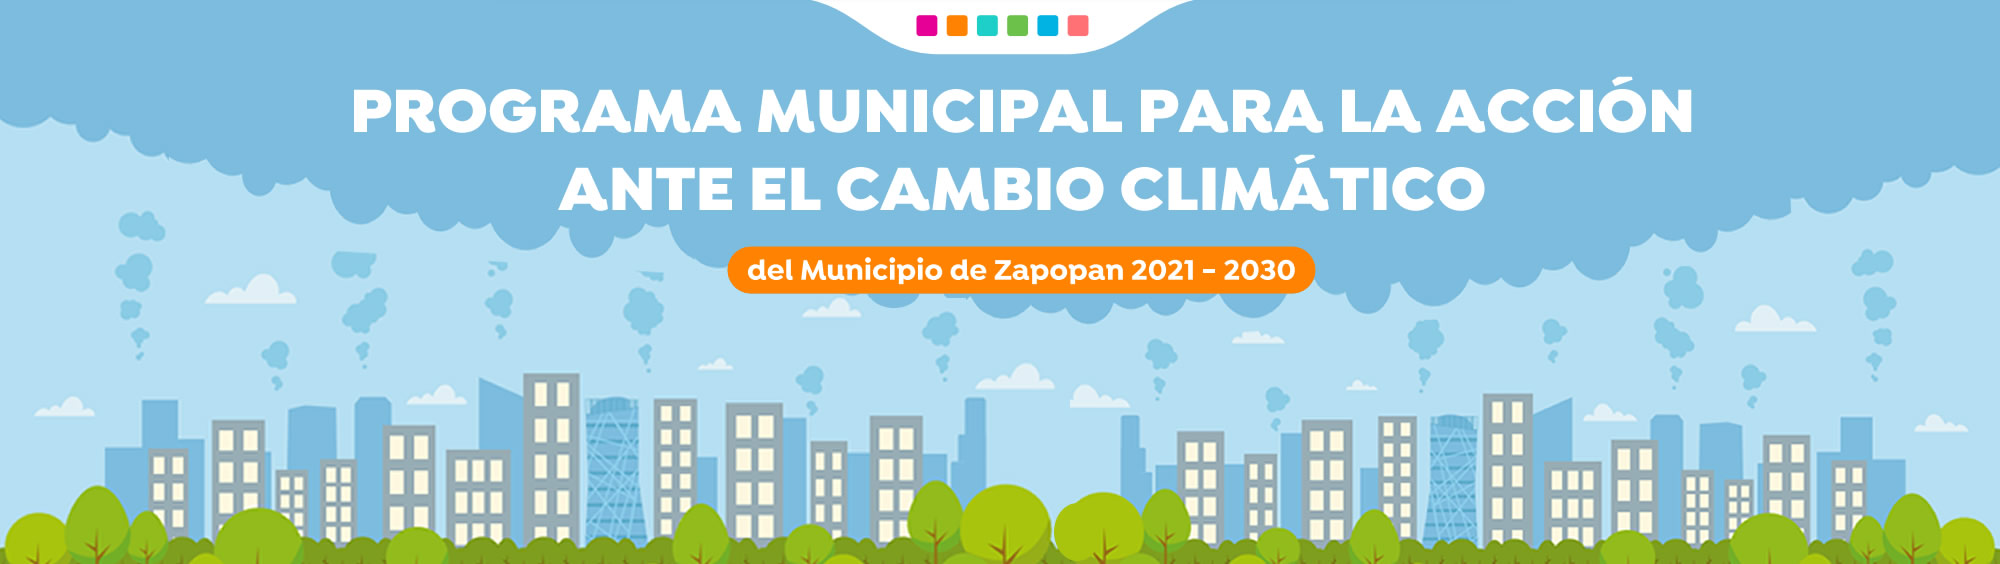 Programa Municipal para Acción ante el Cambio Climático